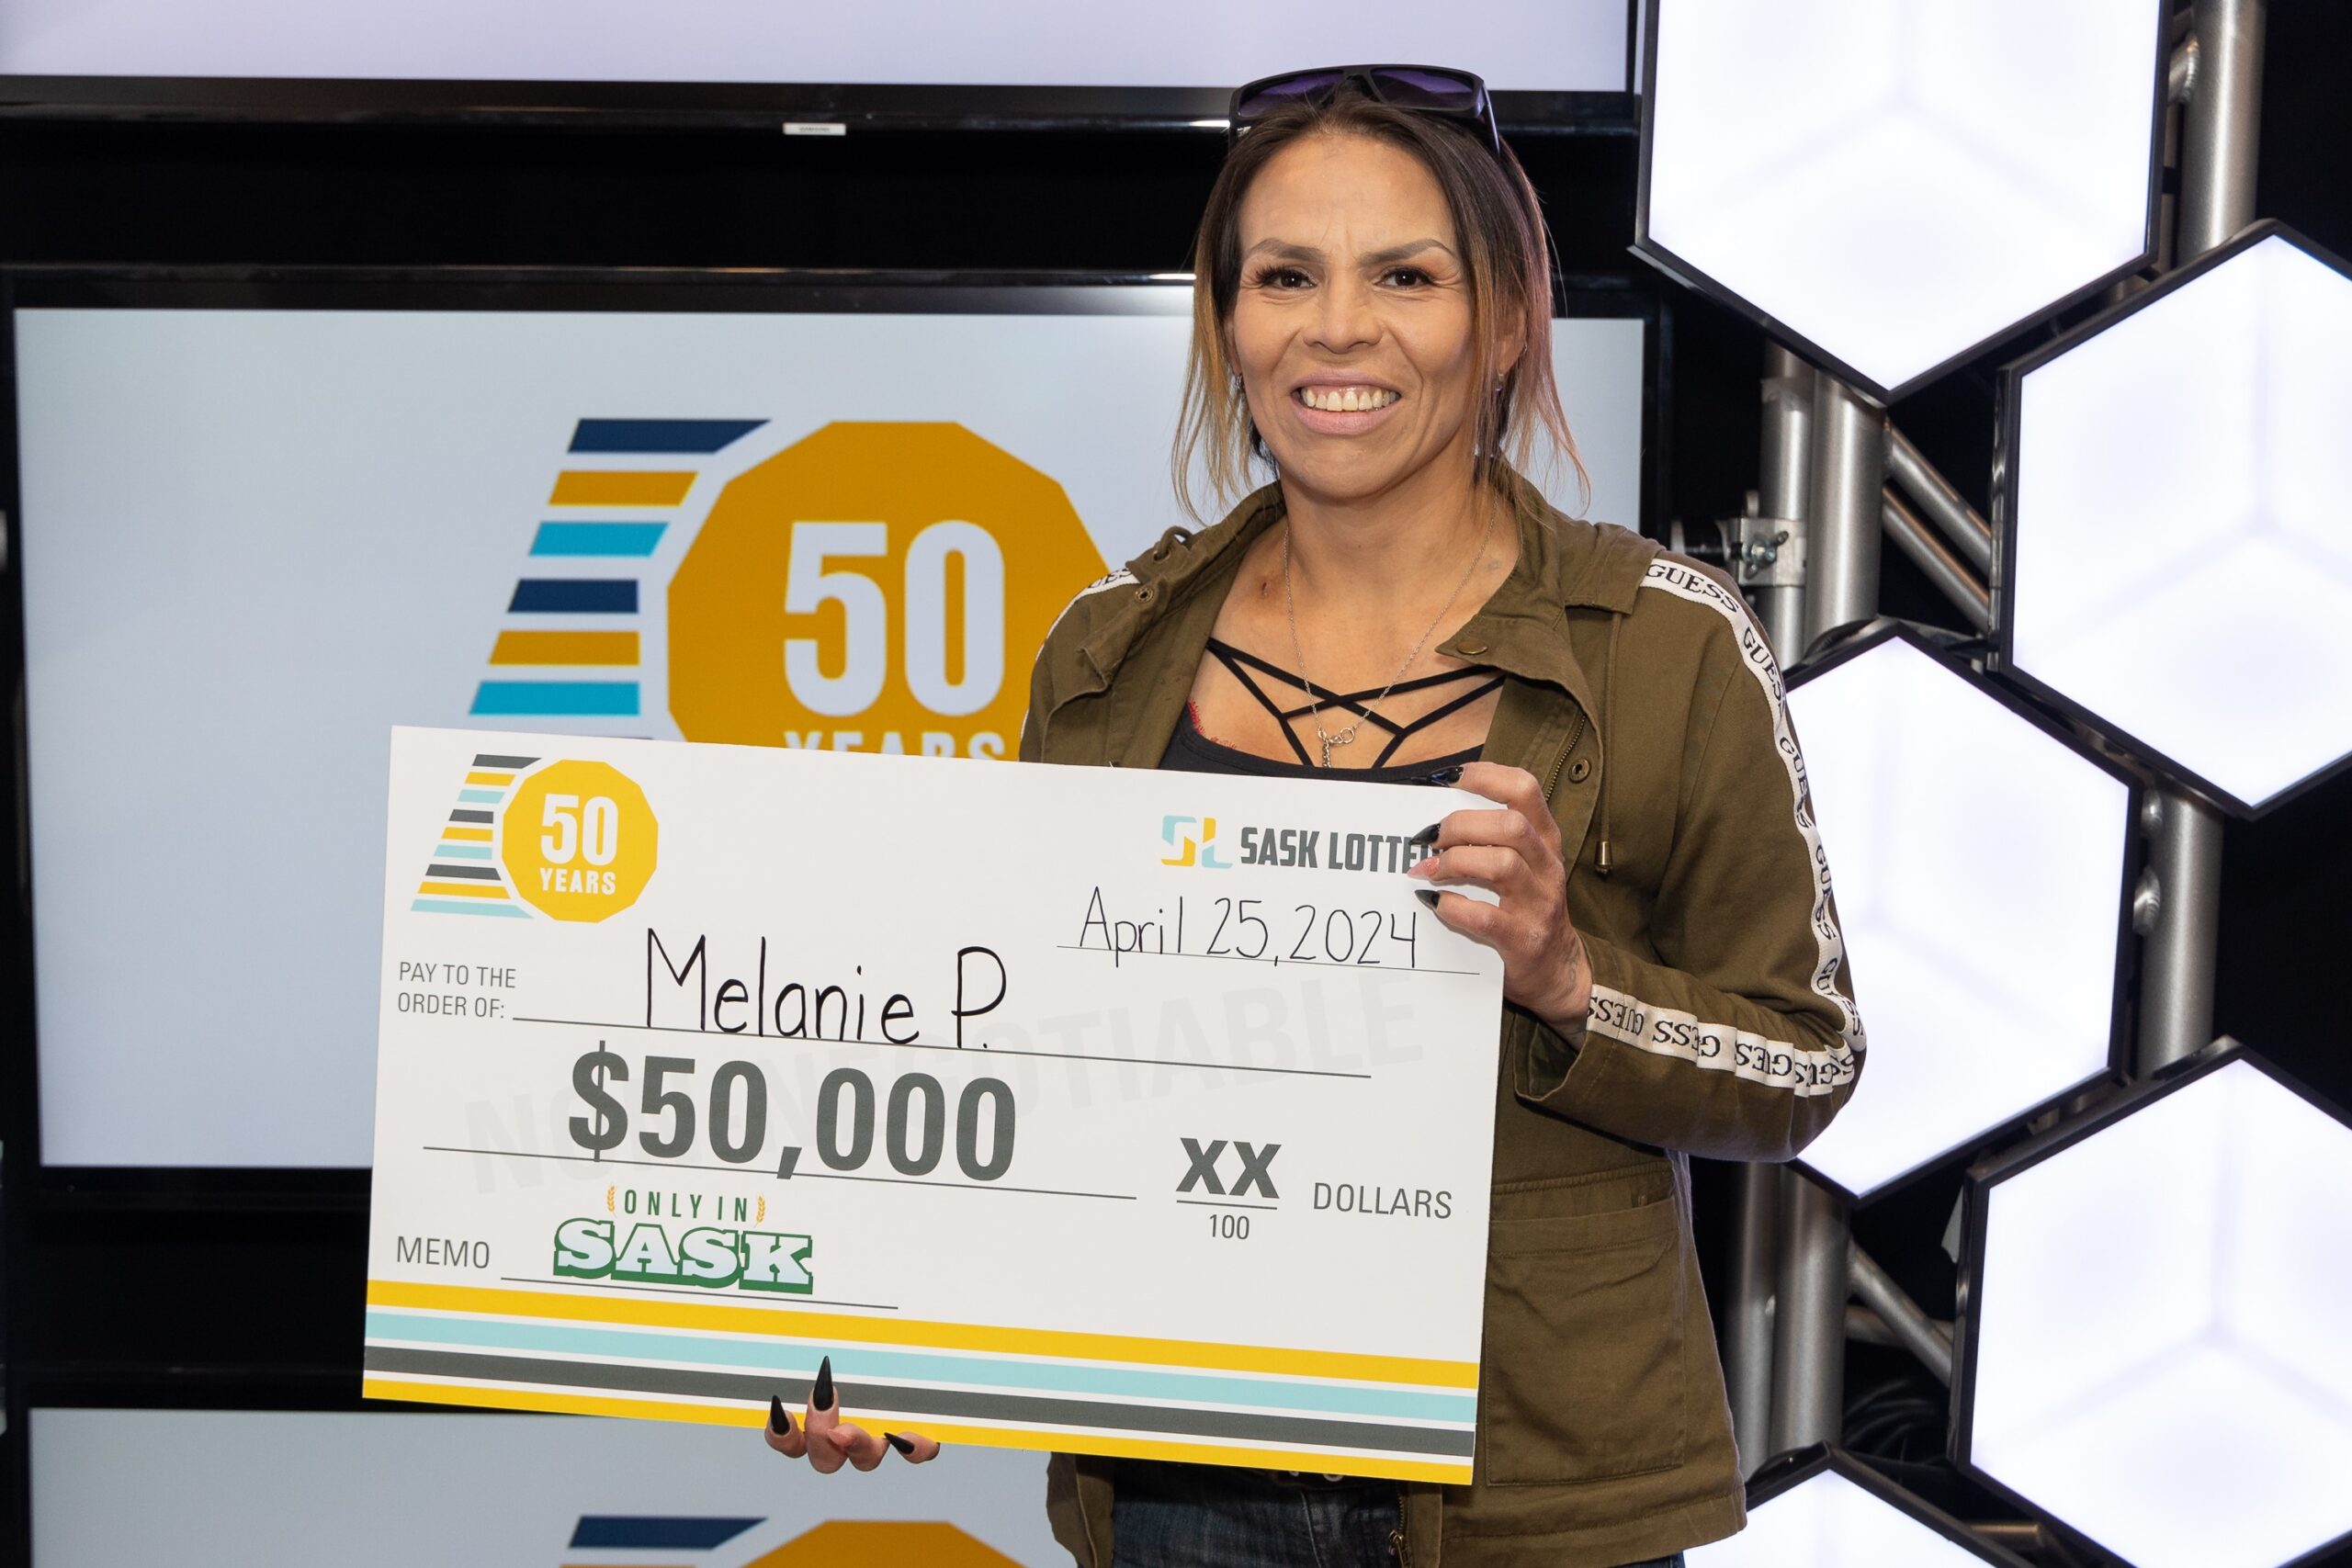 Melanie Peequaquat wins $50,000 ONLY IN SASK